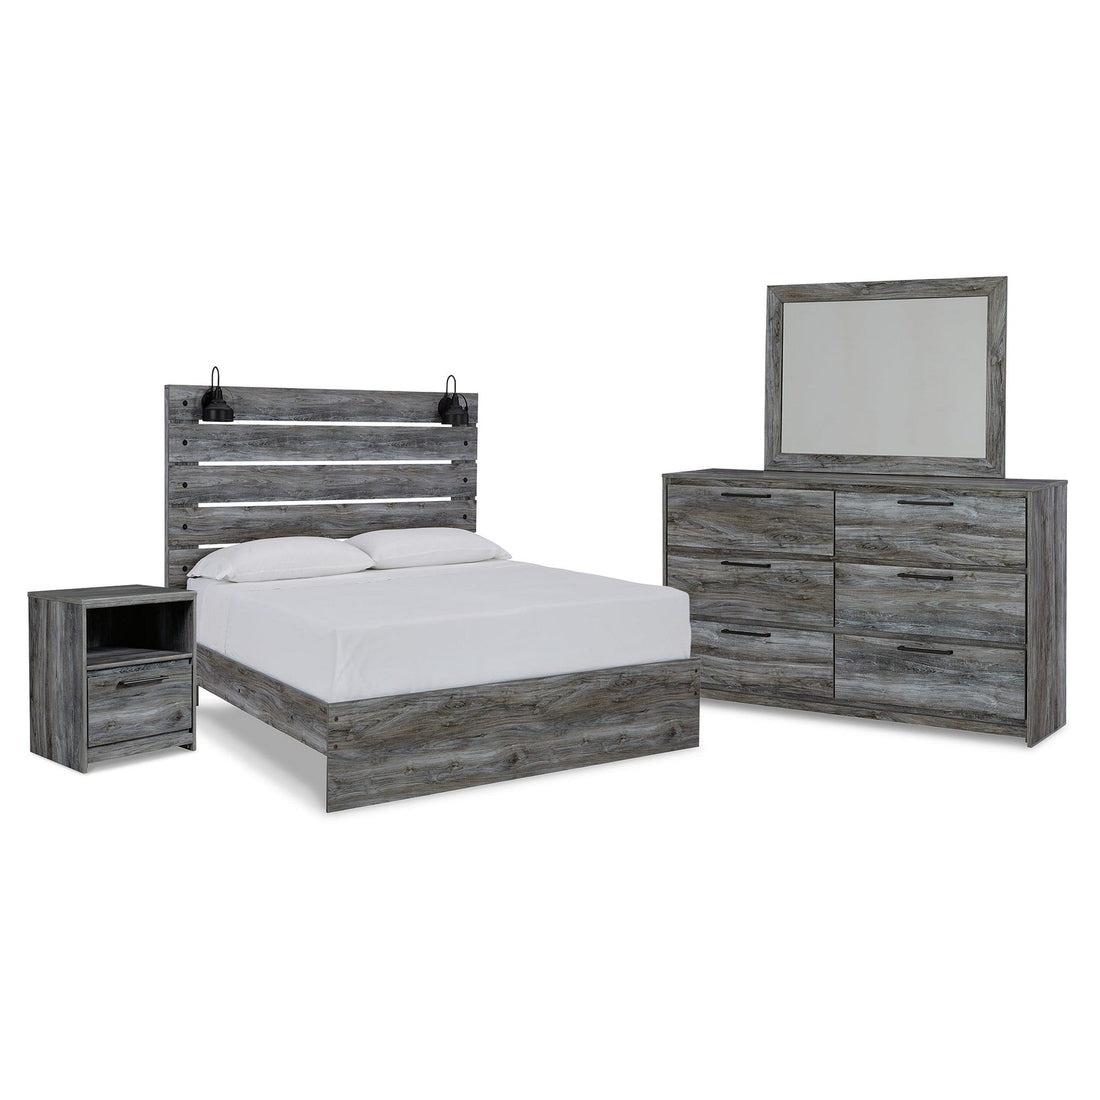 Baystorm Queen Panel Bed, Dresser, Mirror and Nightstand Ash-B221B41